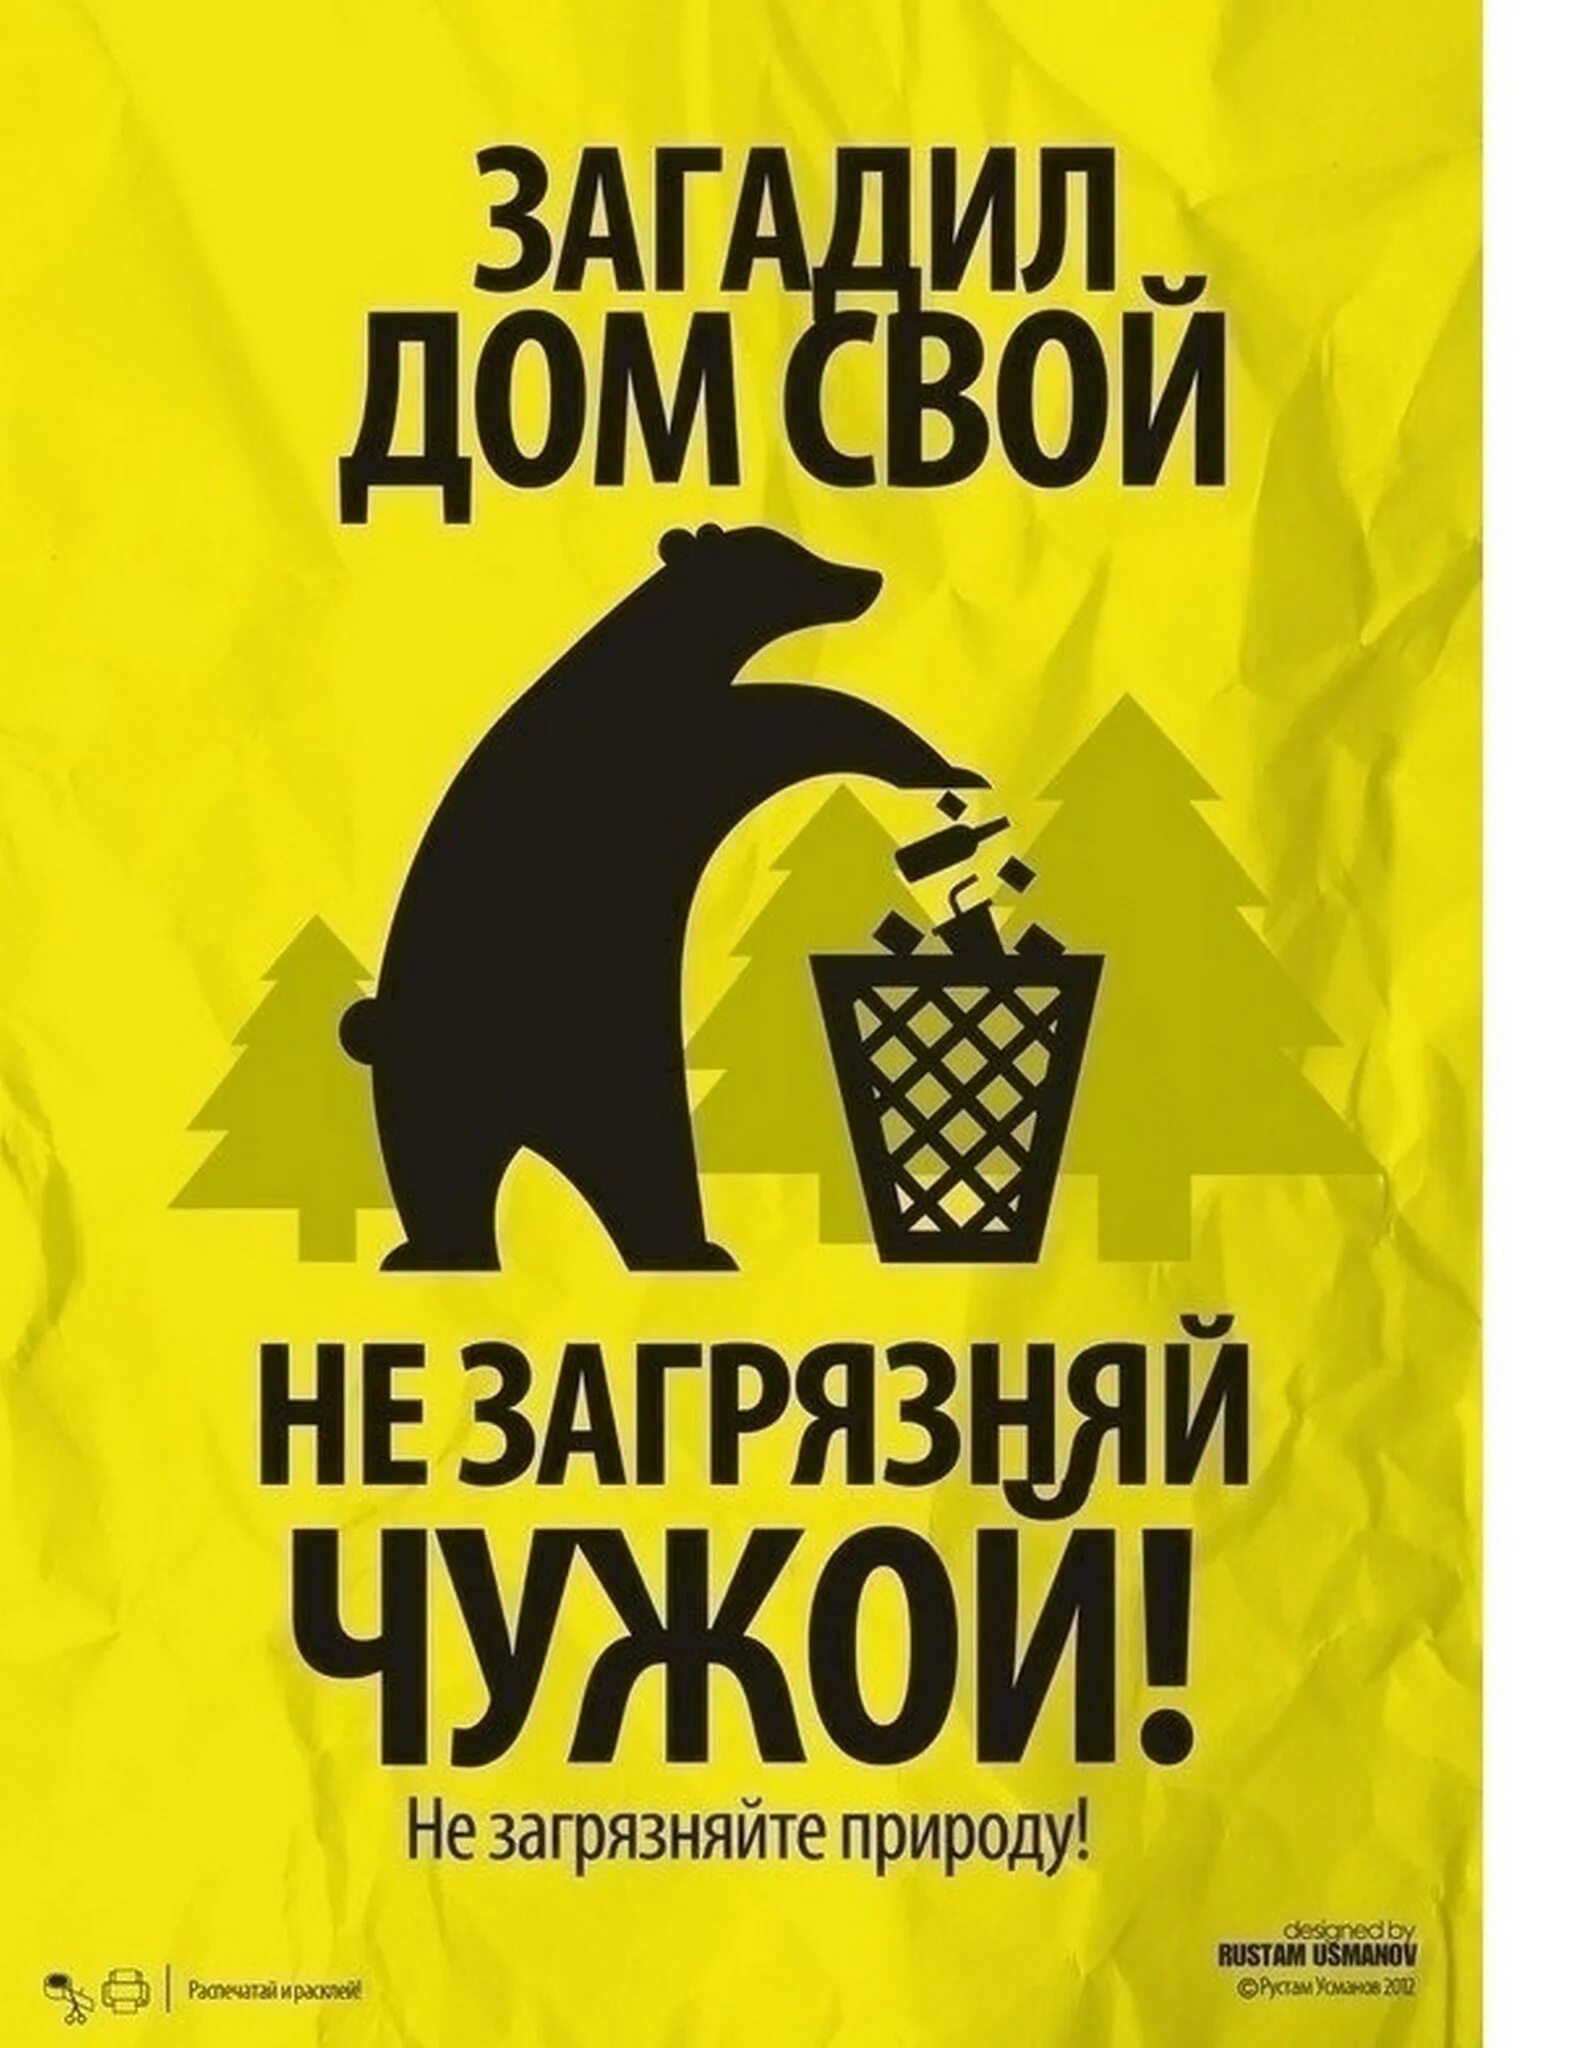 Экологический плакат. Слоган охраны